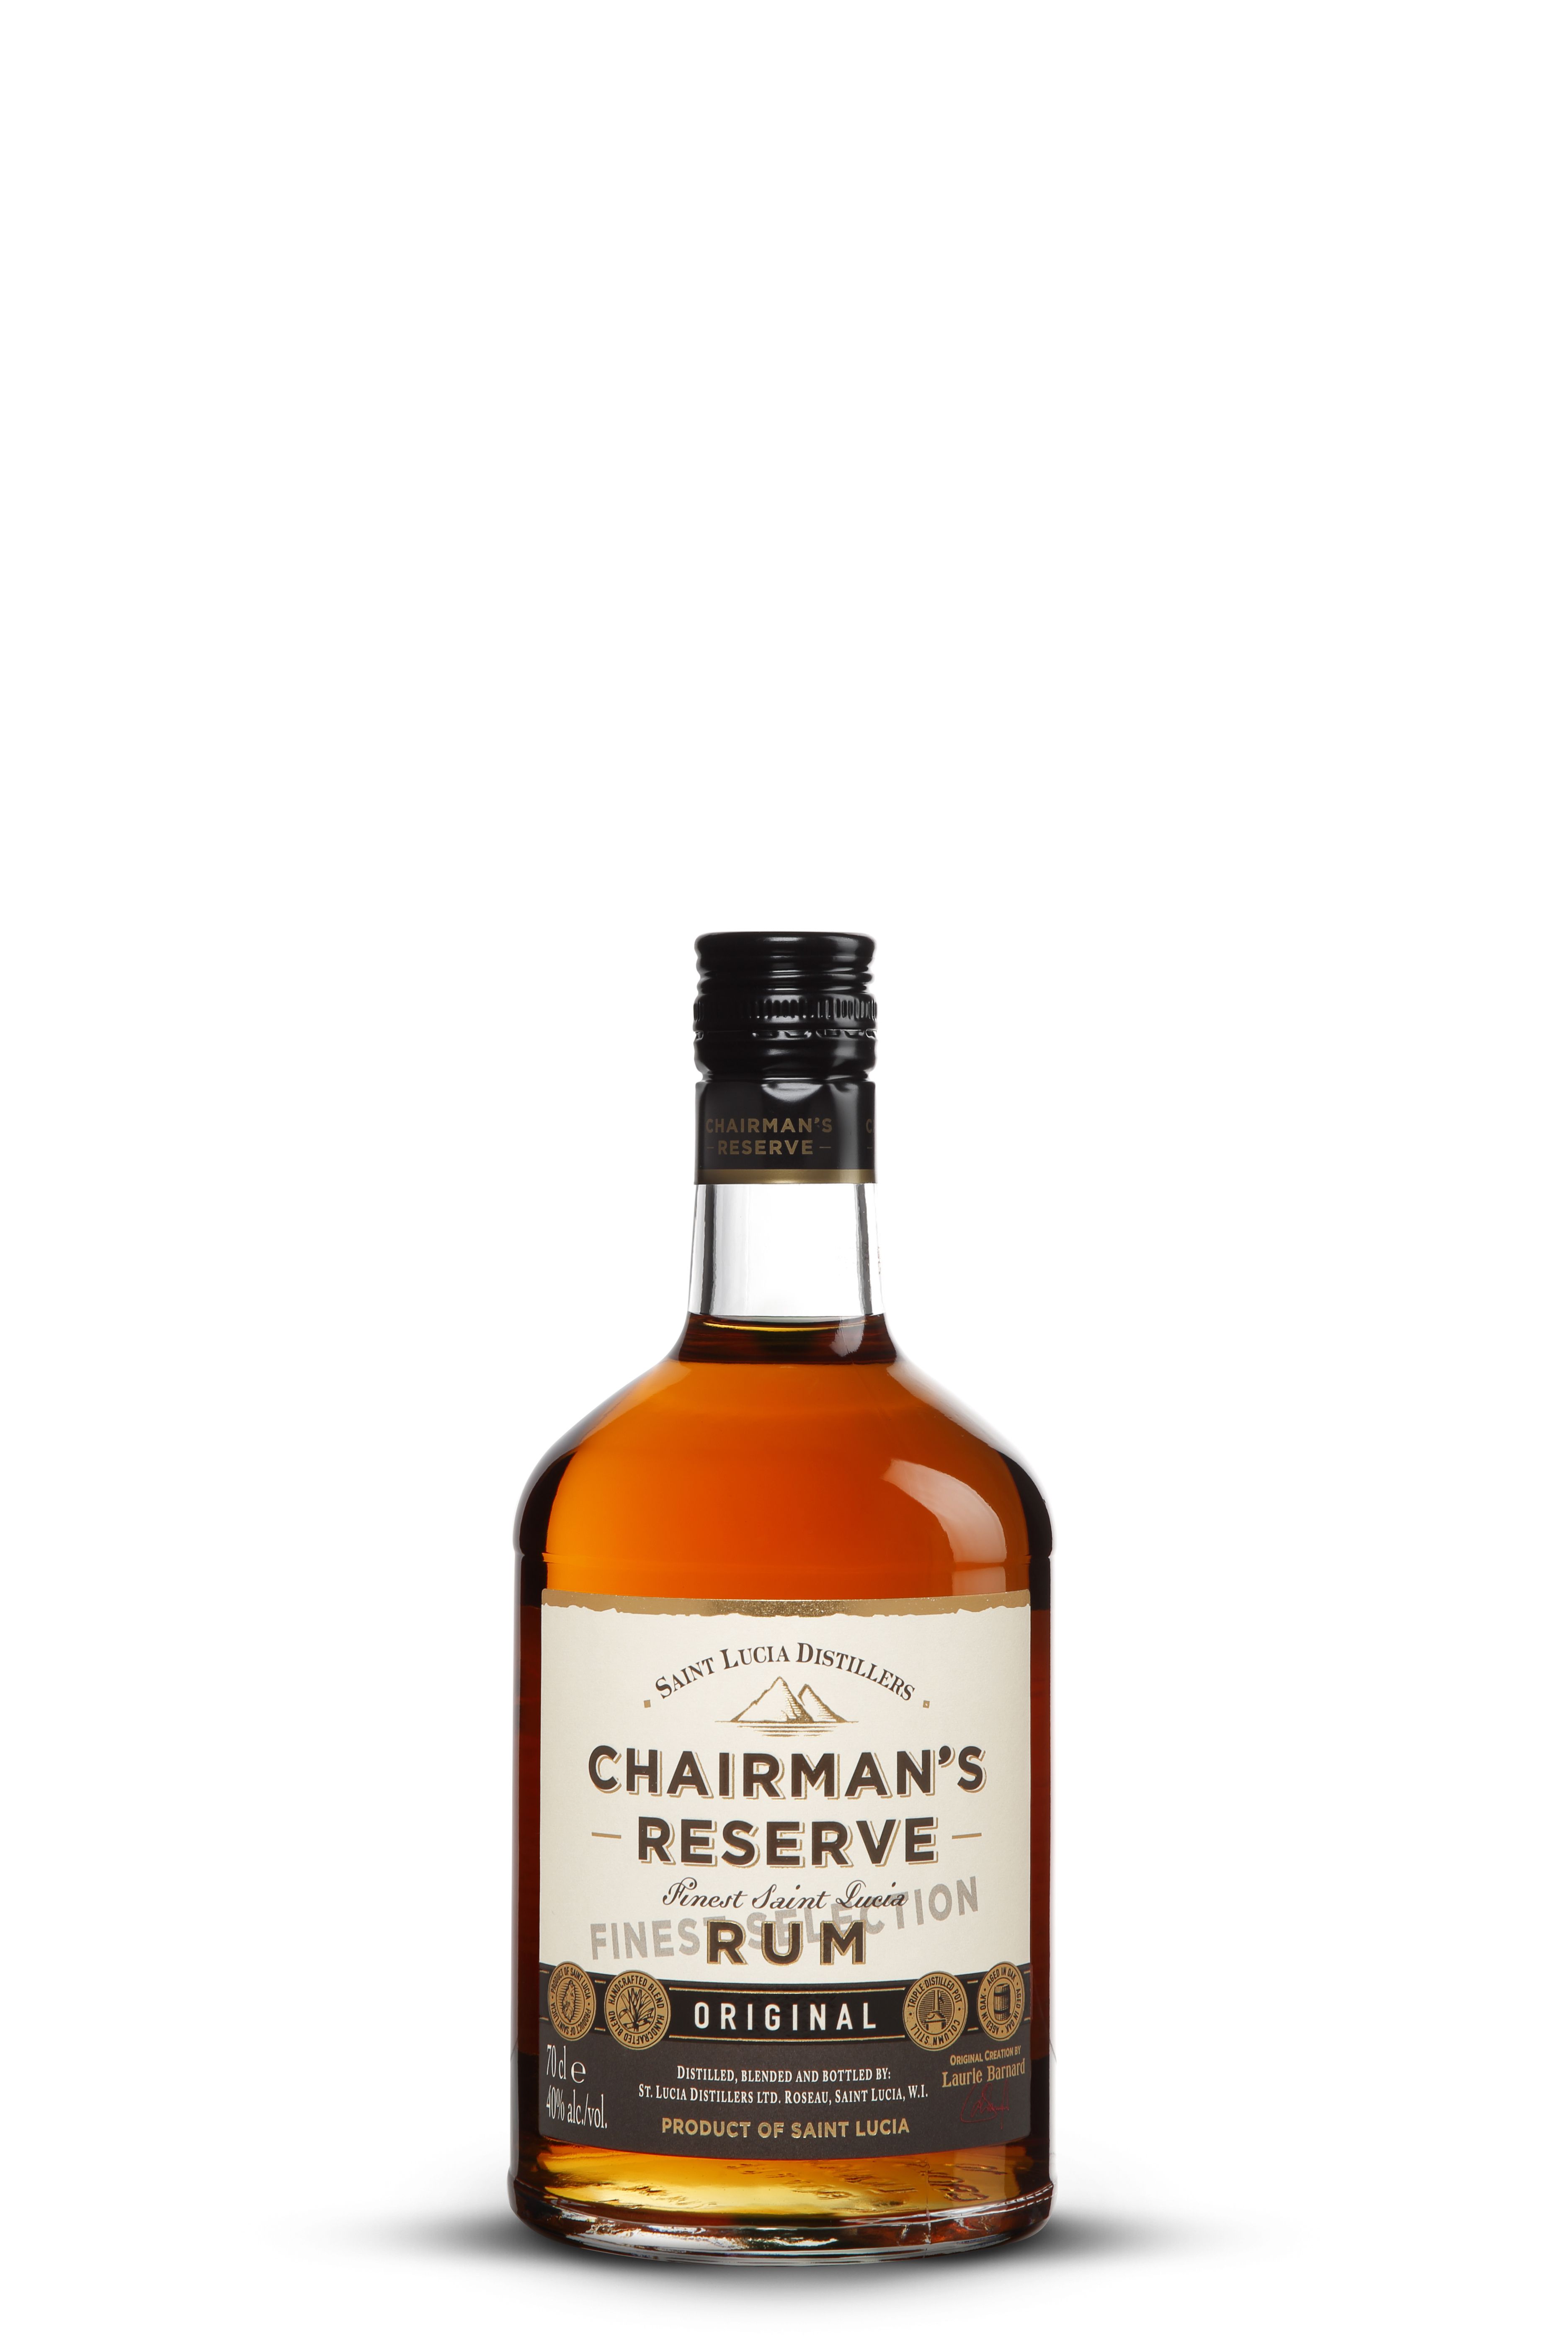 Chairman's Reserve Rum